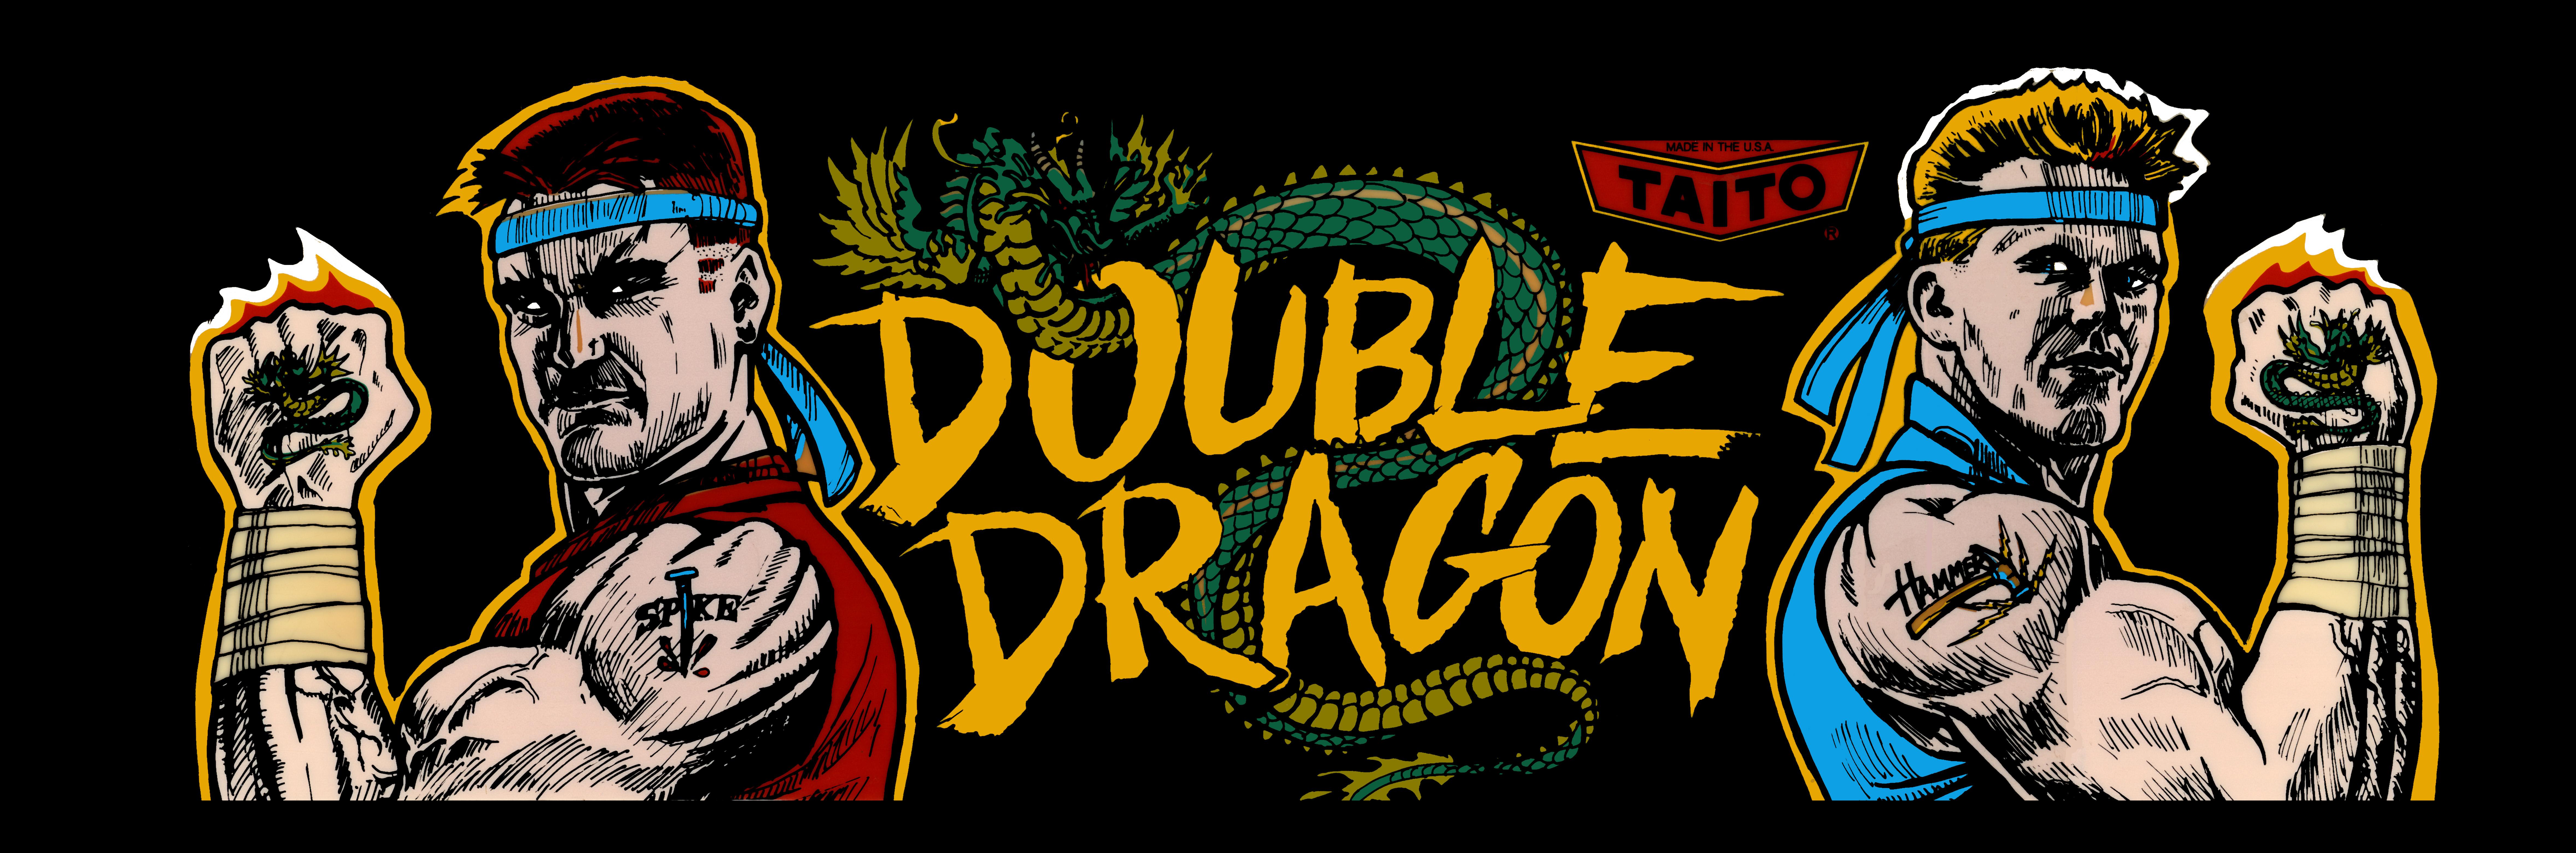 Double Dragon Image American Arcade